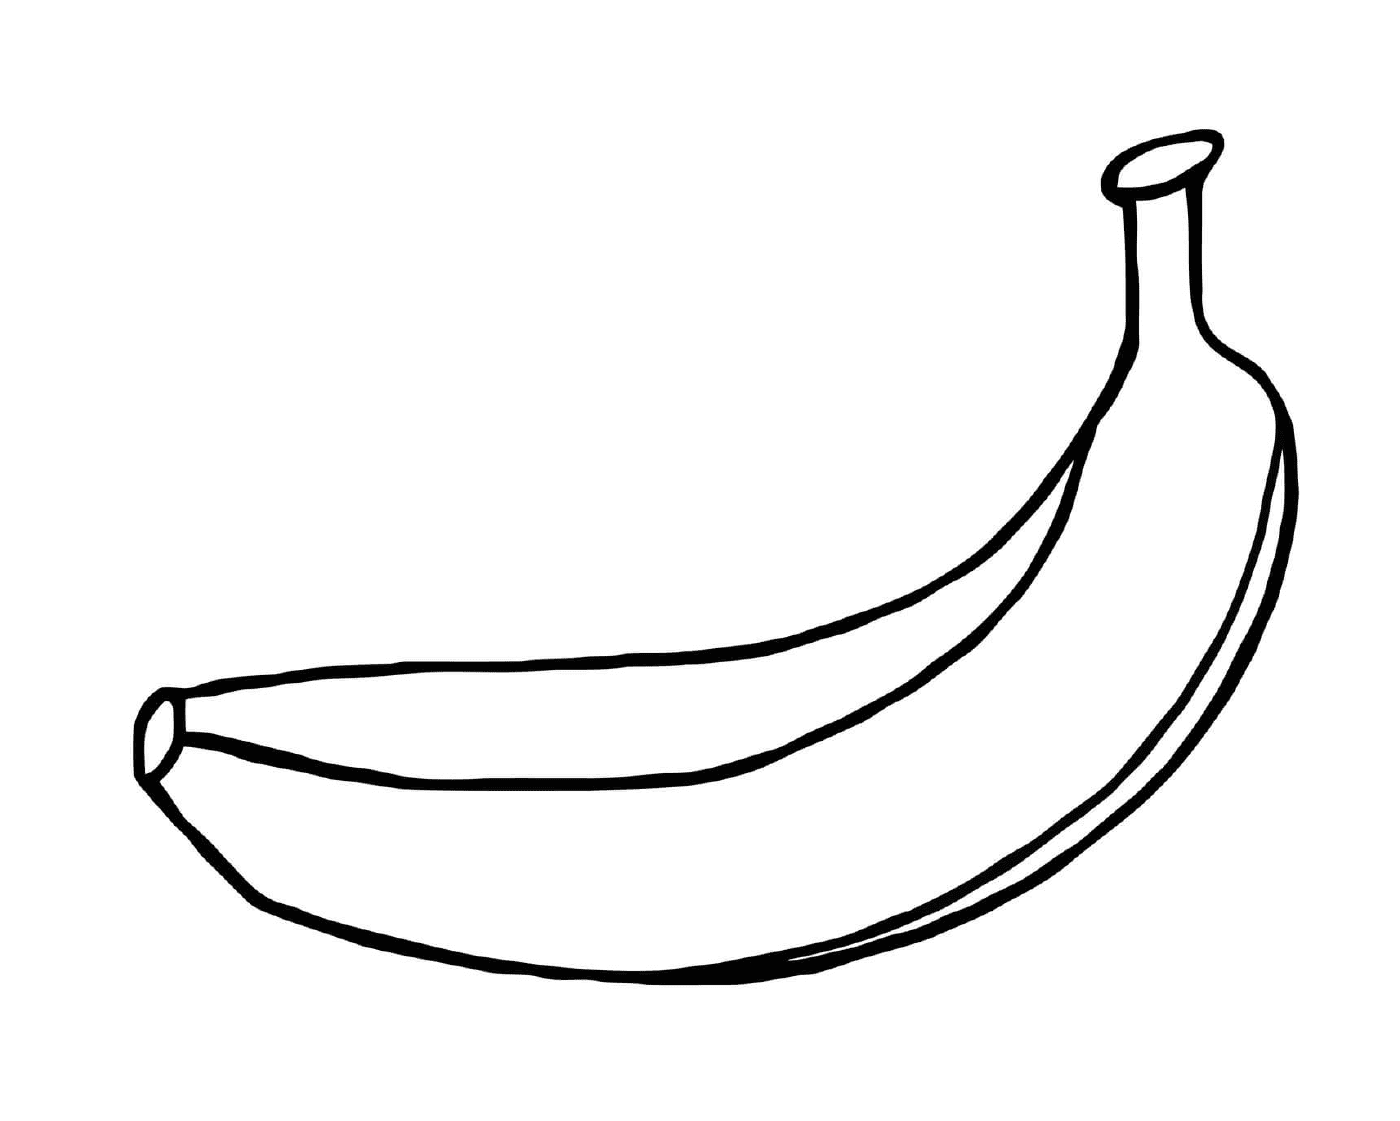  Uma banana 